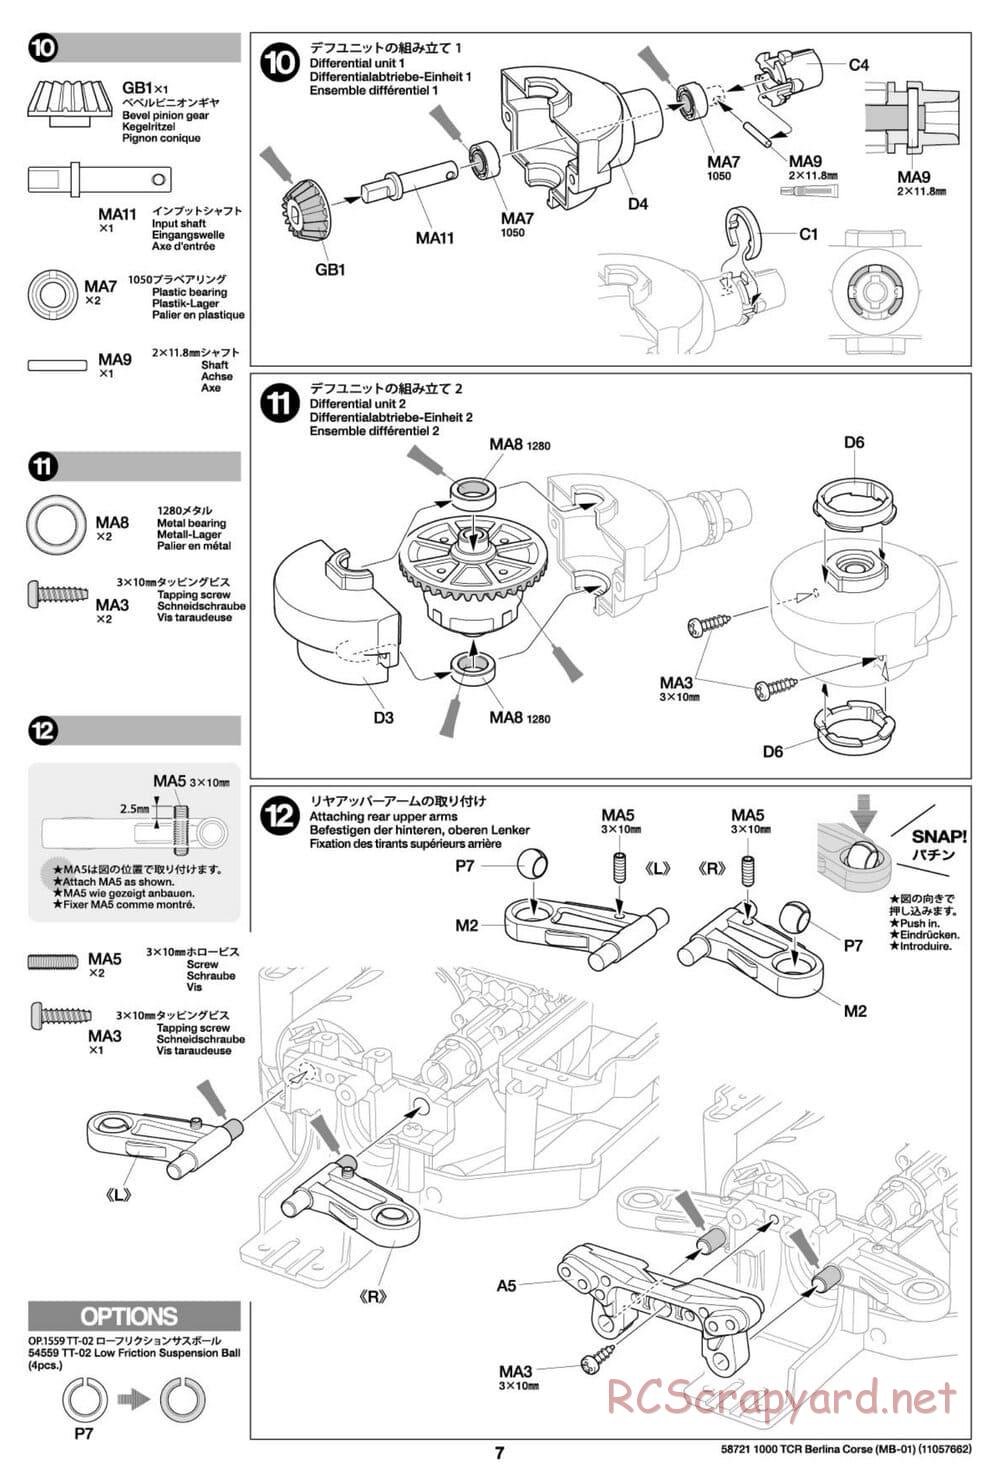 Tamiya - Fiat Abarth 1000 TCR Berlina Corsa - MB-01 Chassis - Manual - Page 7